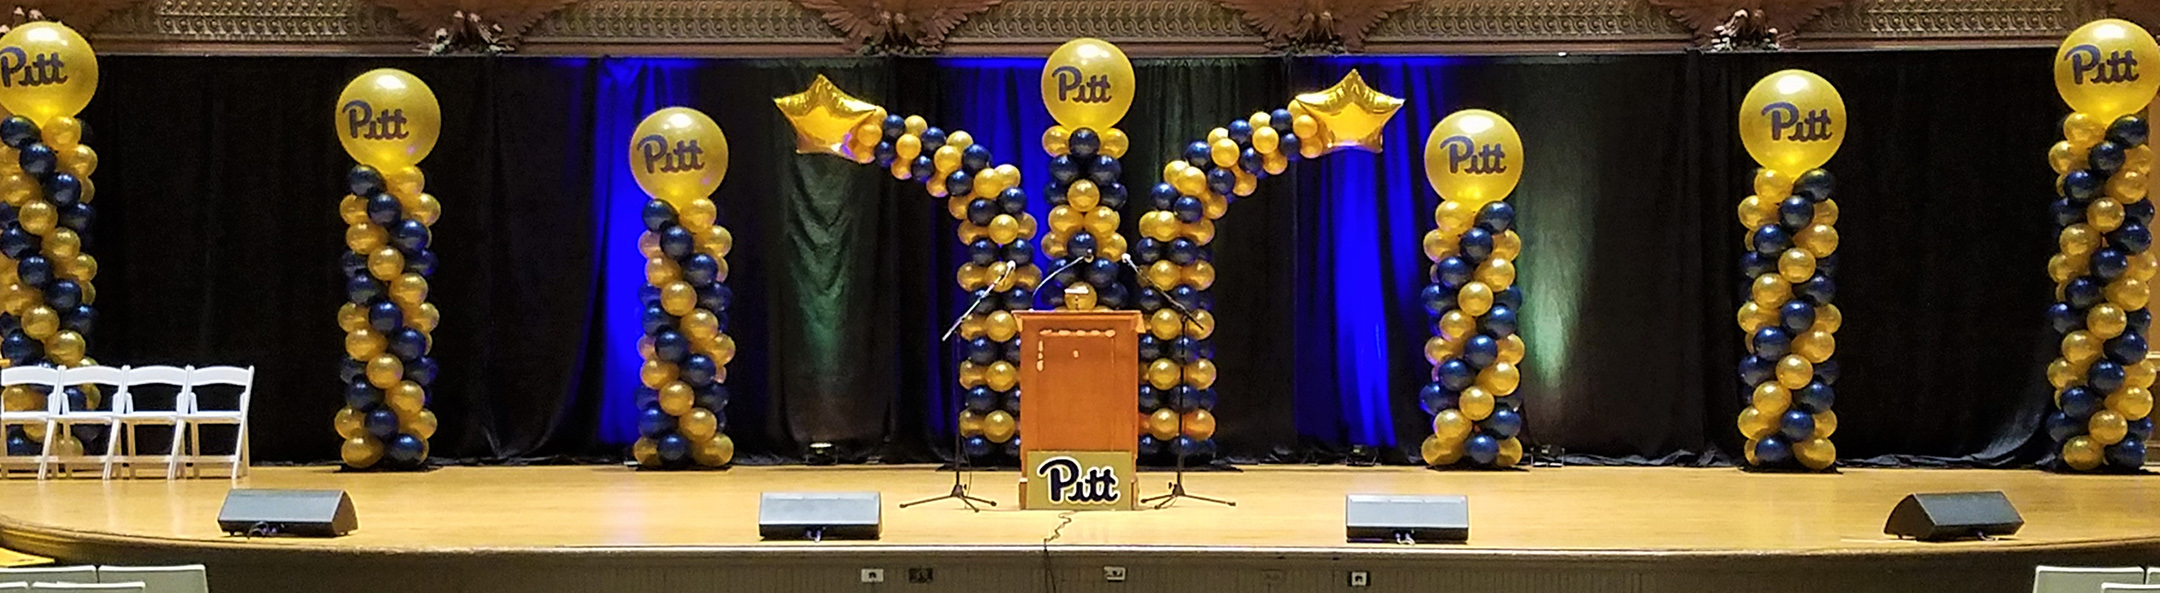 Pittsburgh Univeristy Balloon Decor